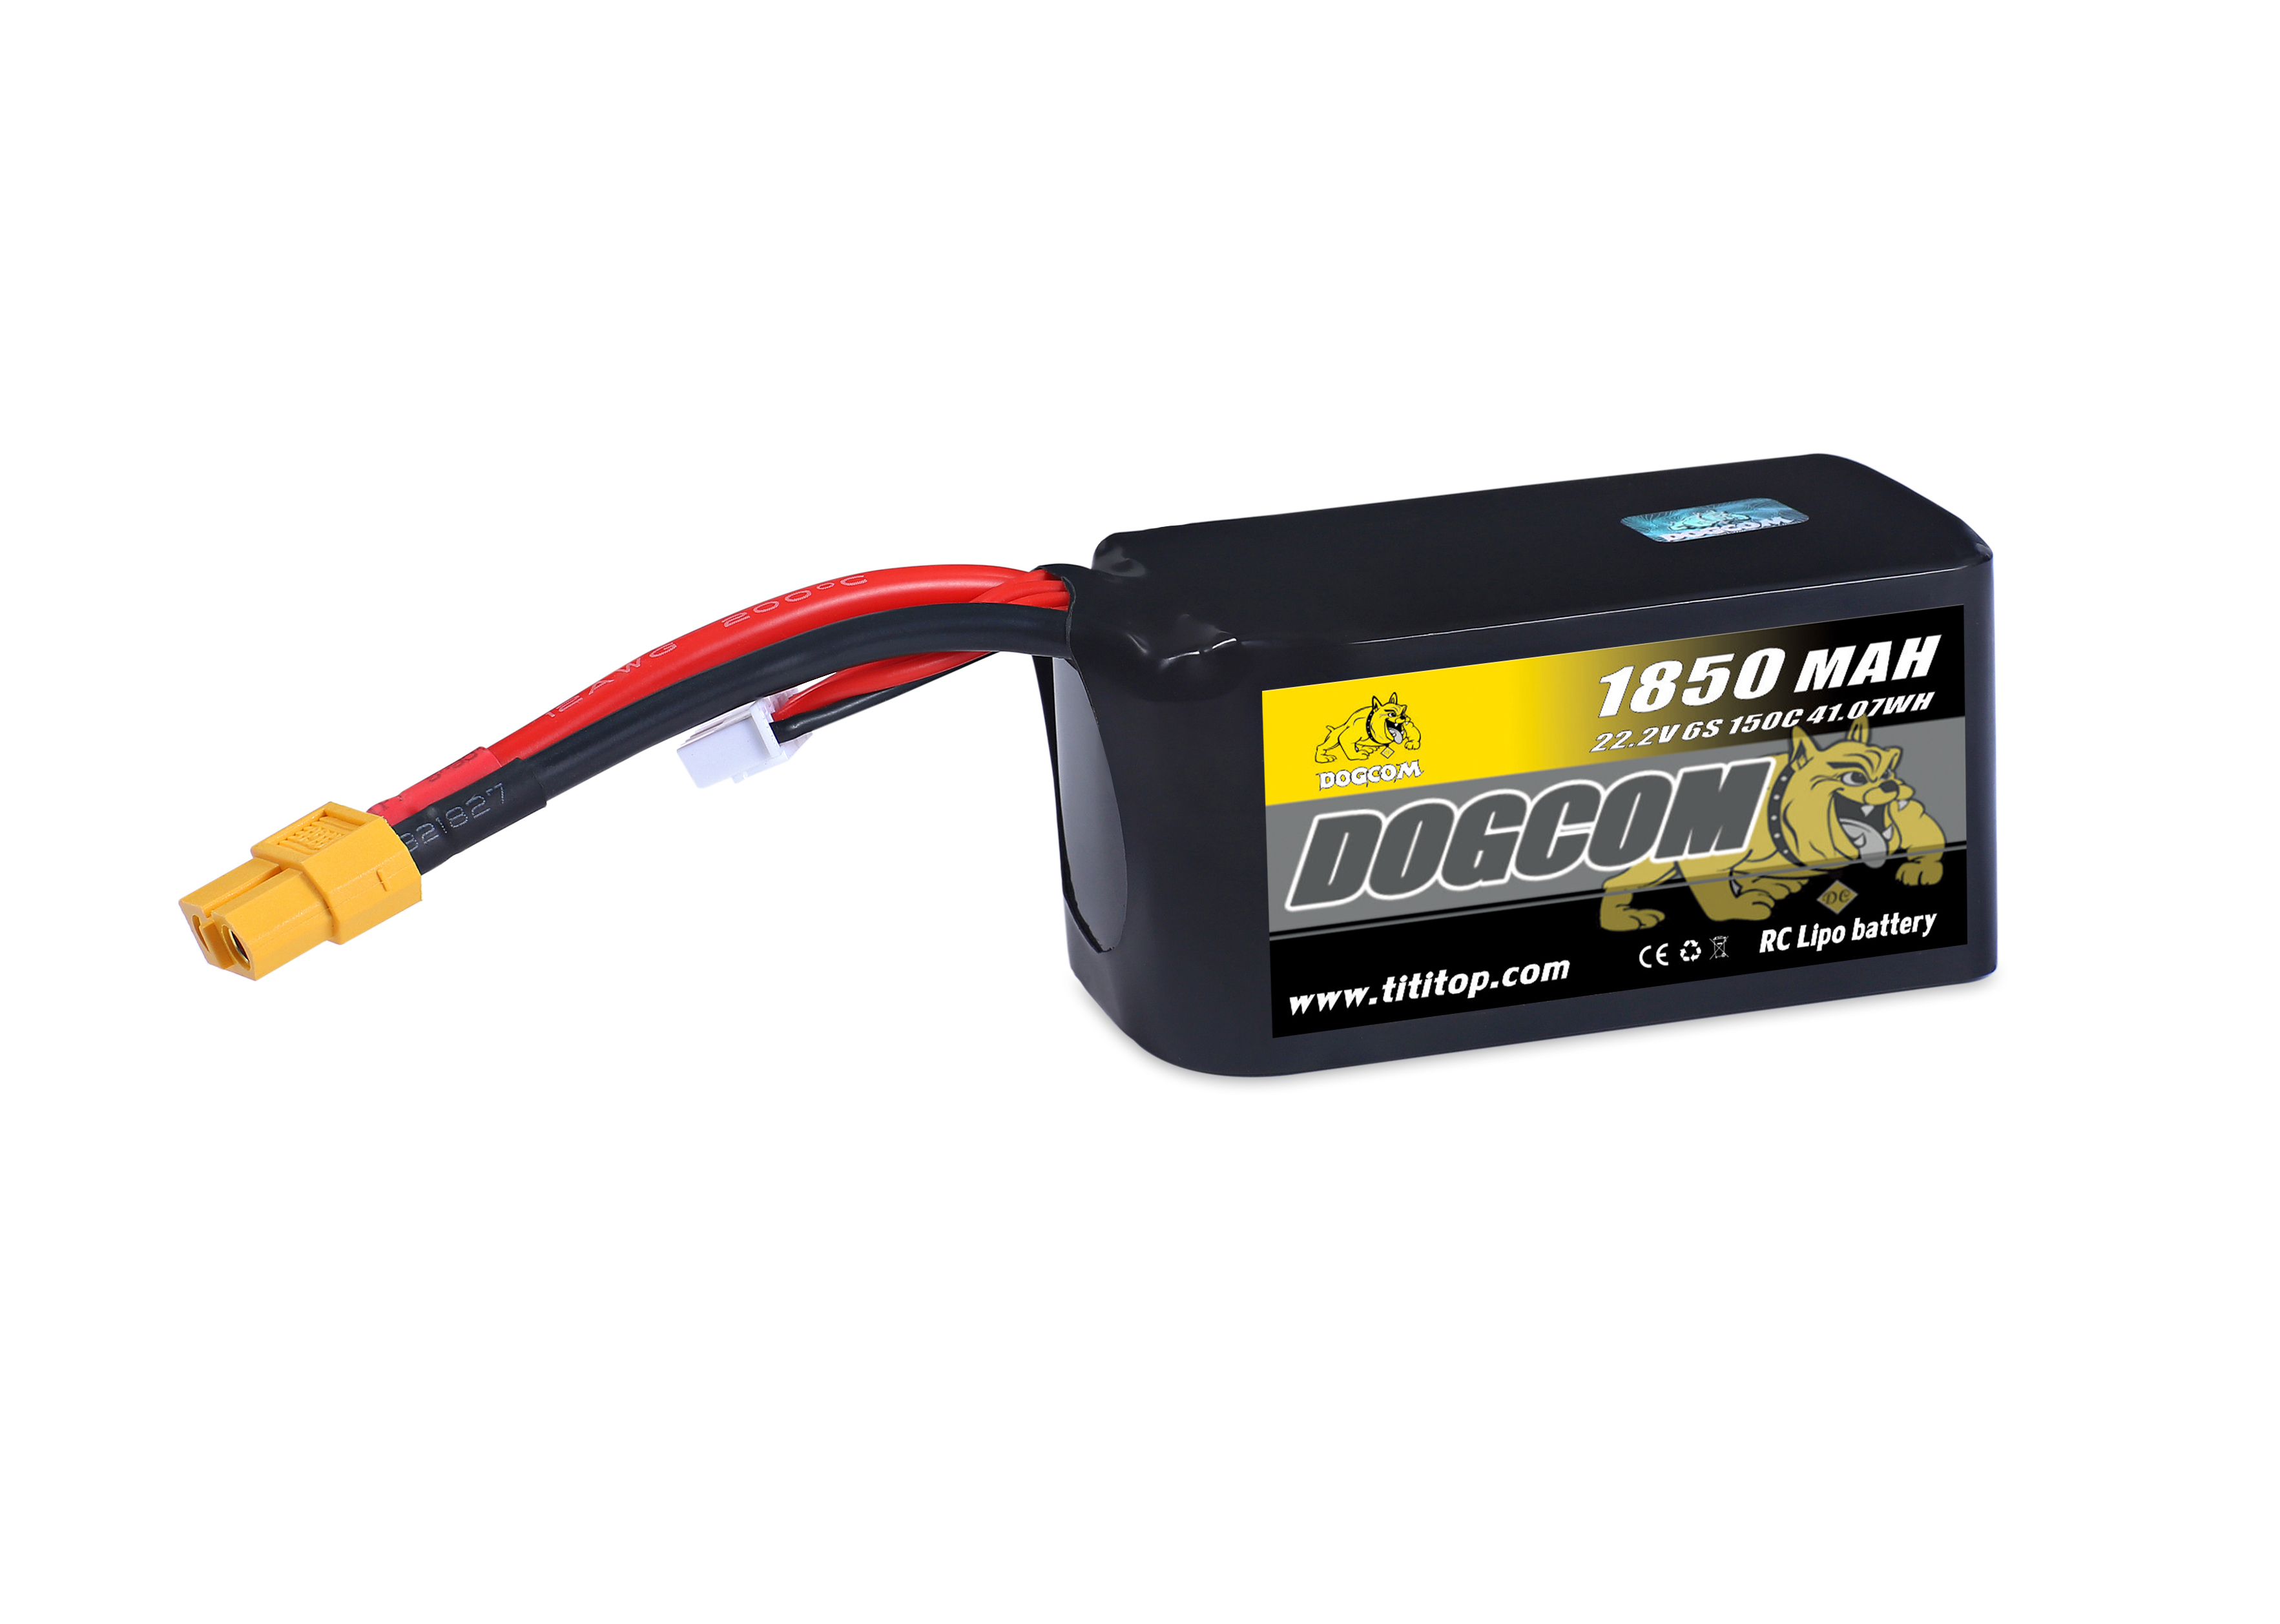 DOGCOM 1850mAh 6S 22.2V 150C lipo battery